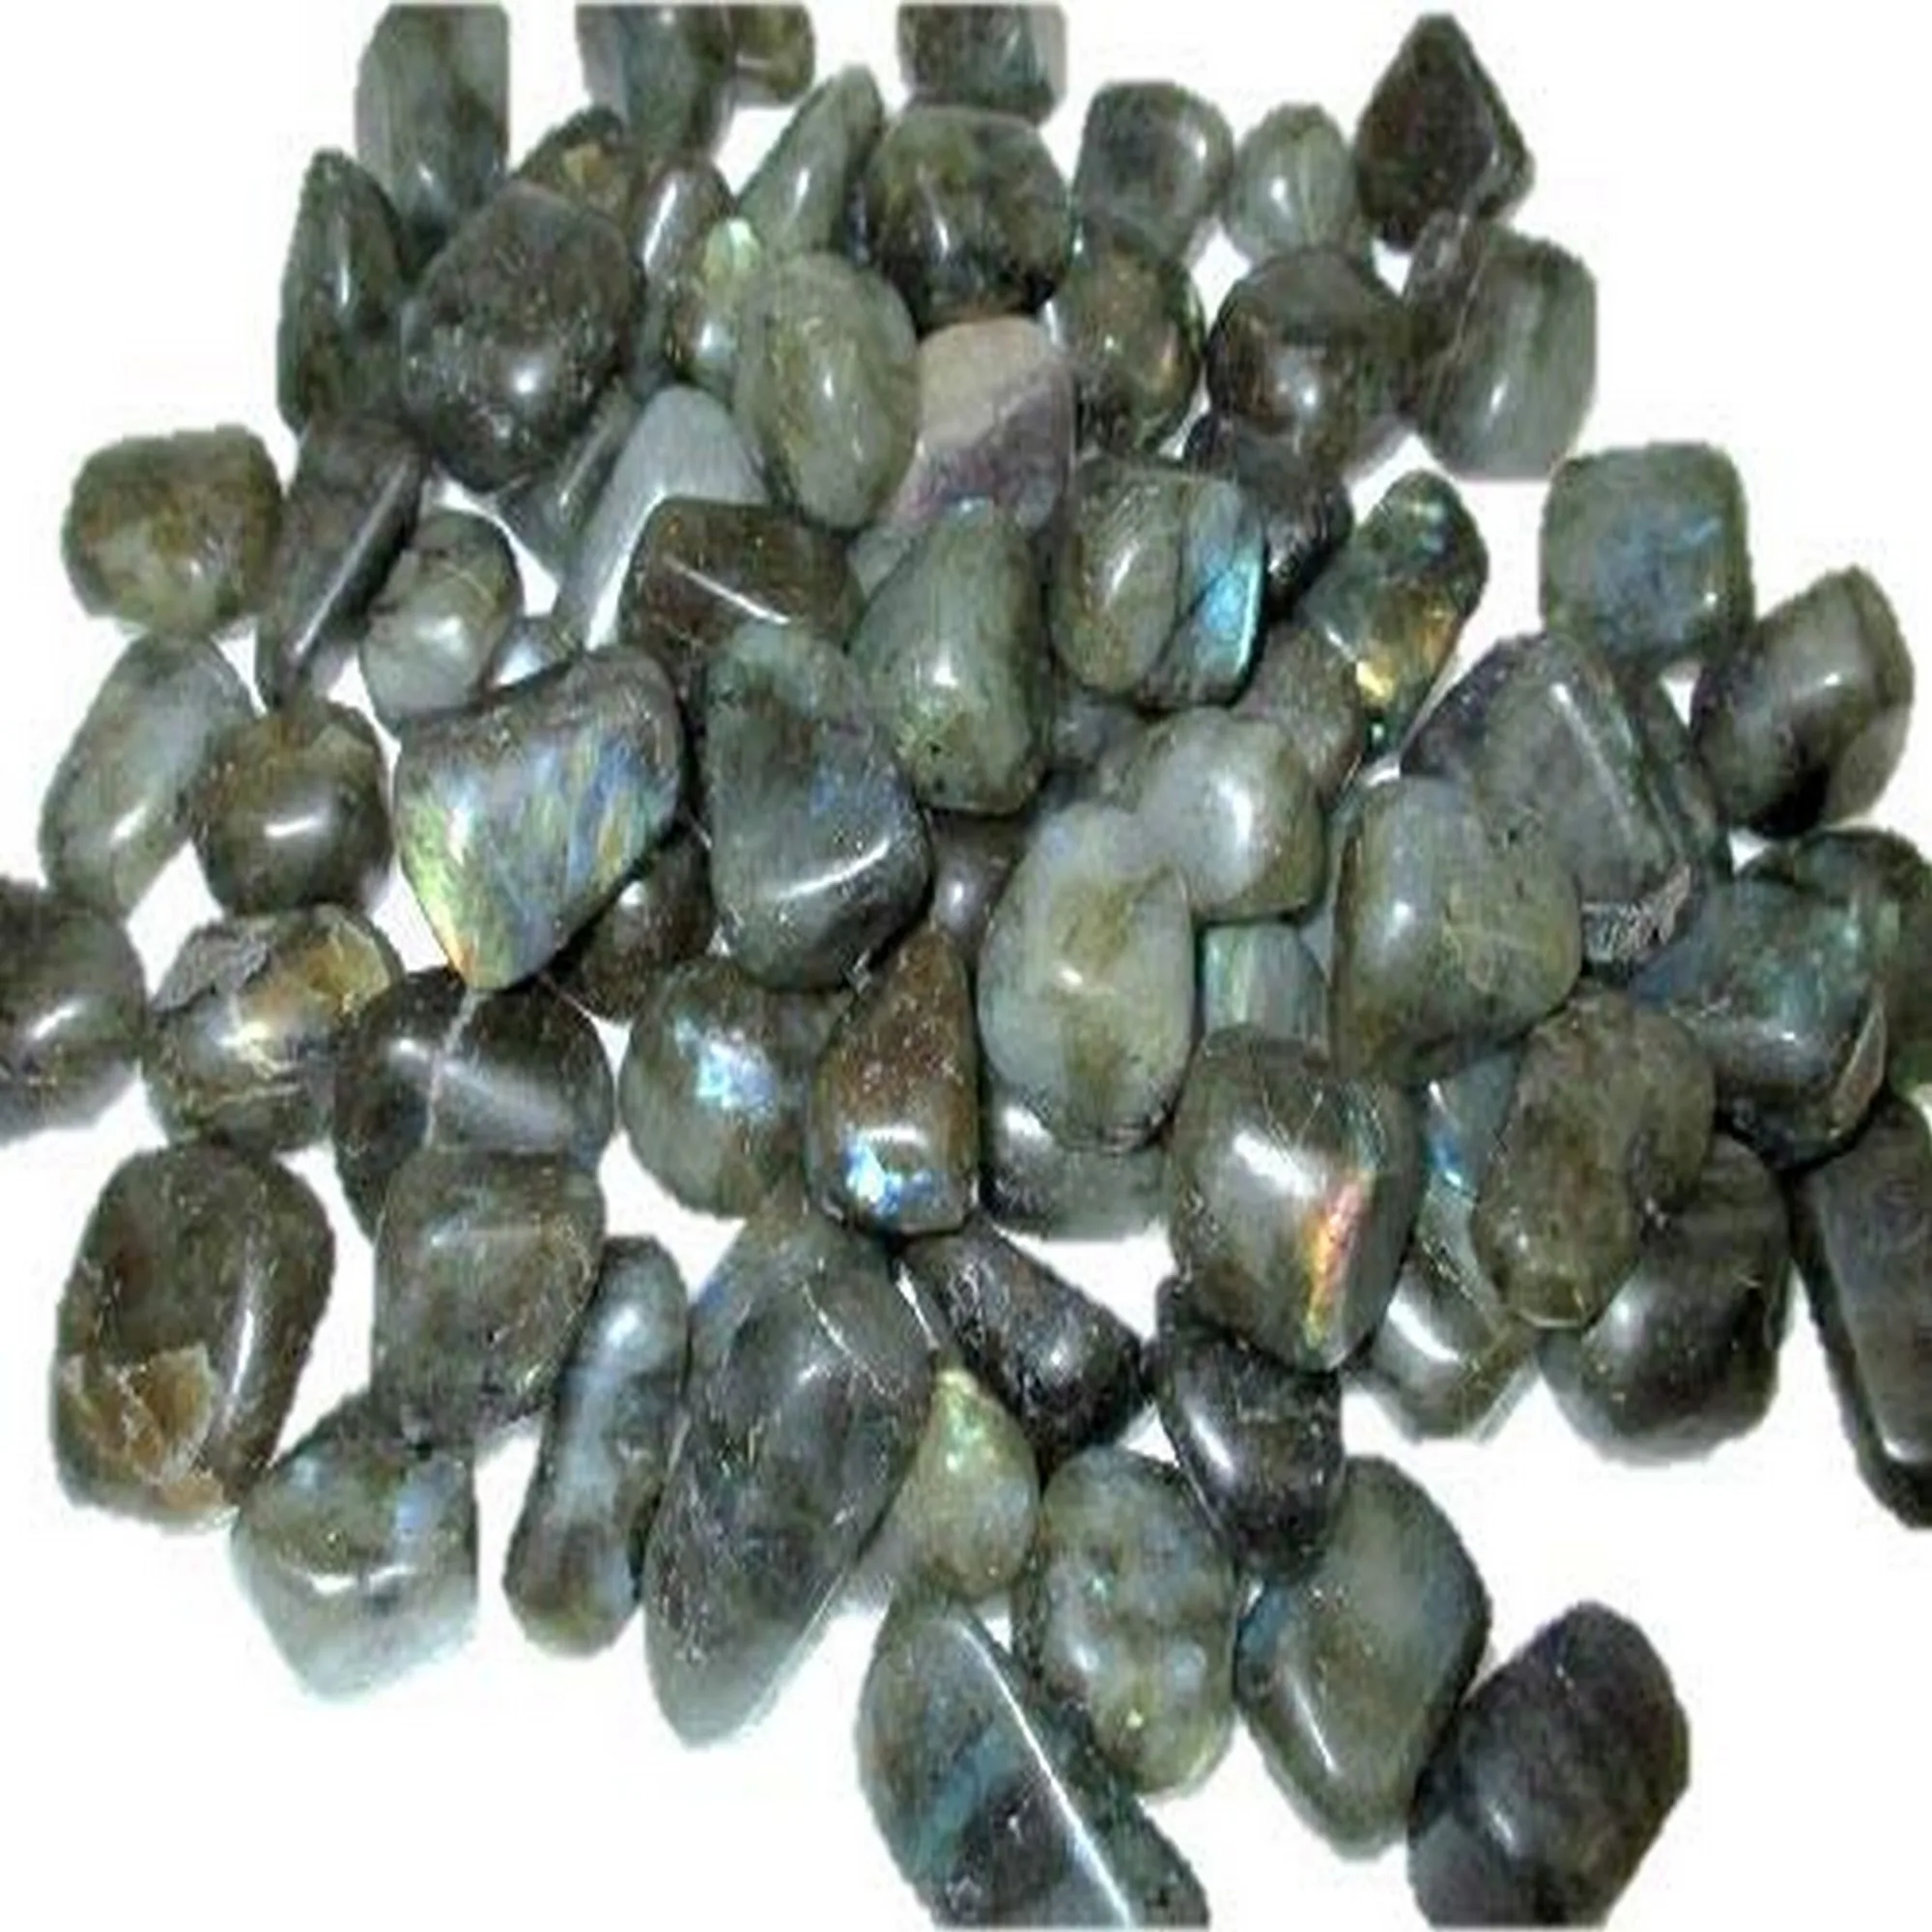 Jet Wow Jet Labradorite Tumbled Stone To 1 Inch Free Booklet International Crystal Therapy 100 Grams - Buy Gemstone Tumbled Stone Set Pyrite Stone Set Stone Set Spiritual